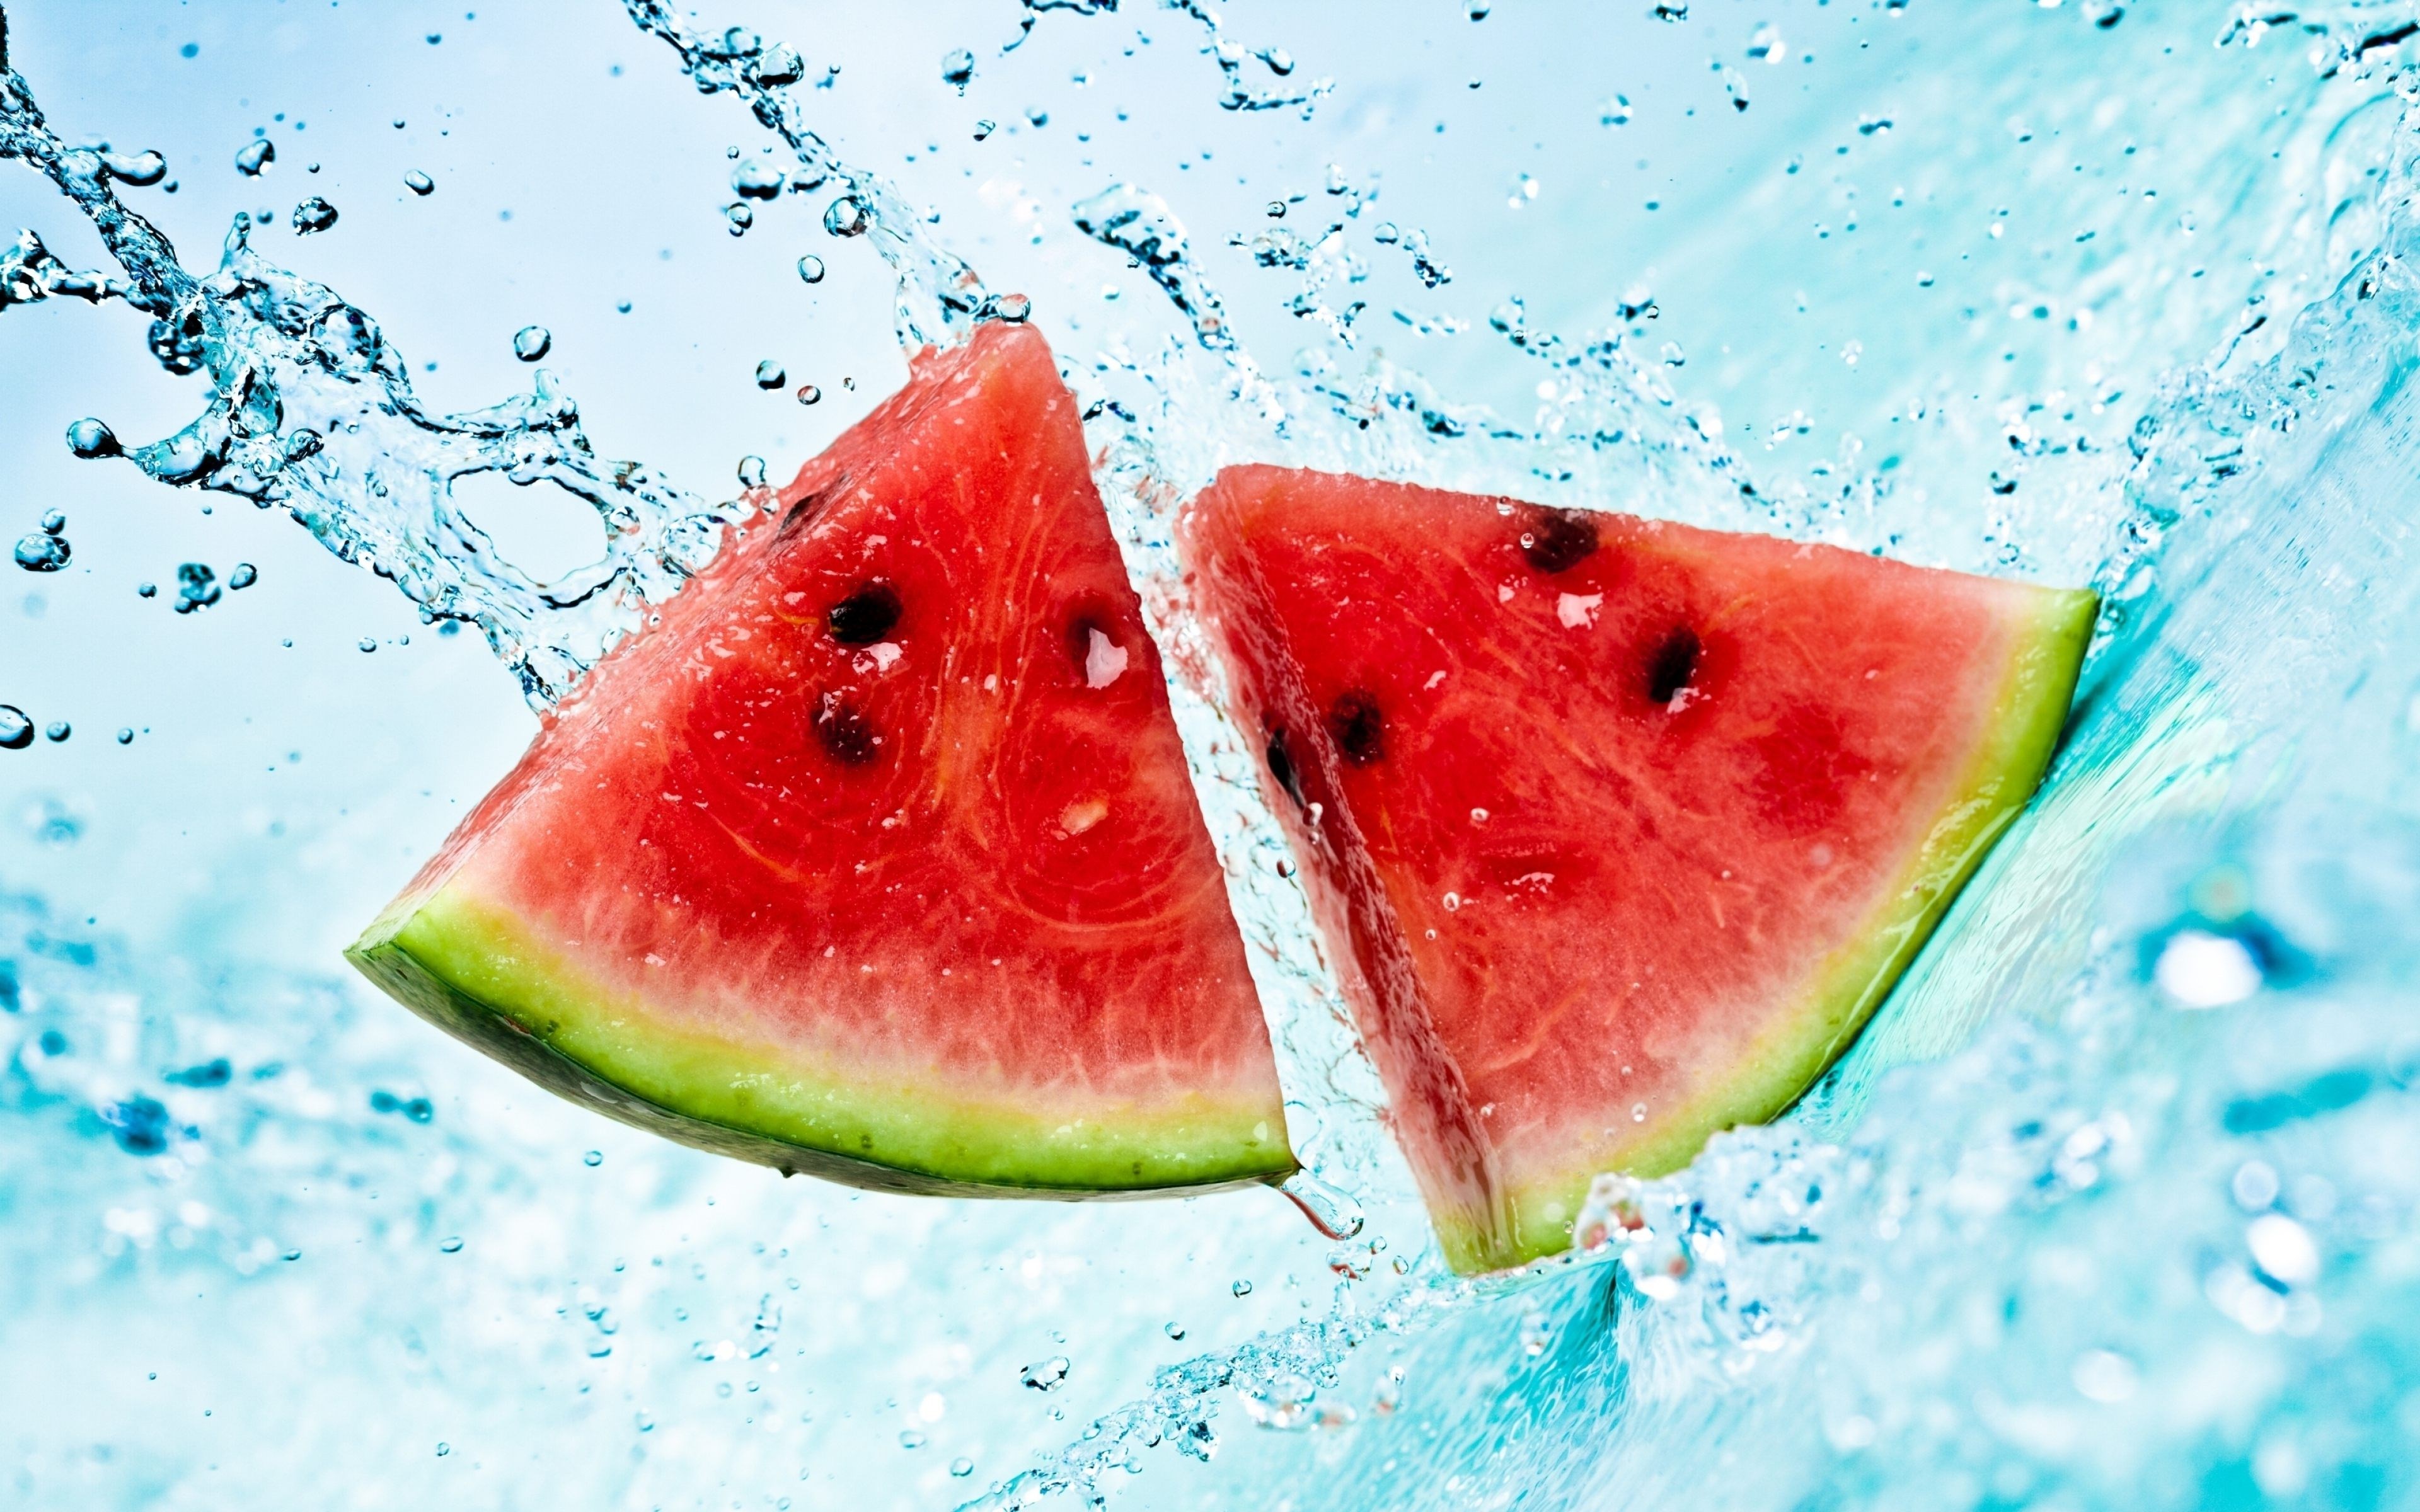 Watermelon Slices Fruit Art 4k Ultra HD Wallpaper High Quality Walls